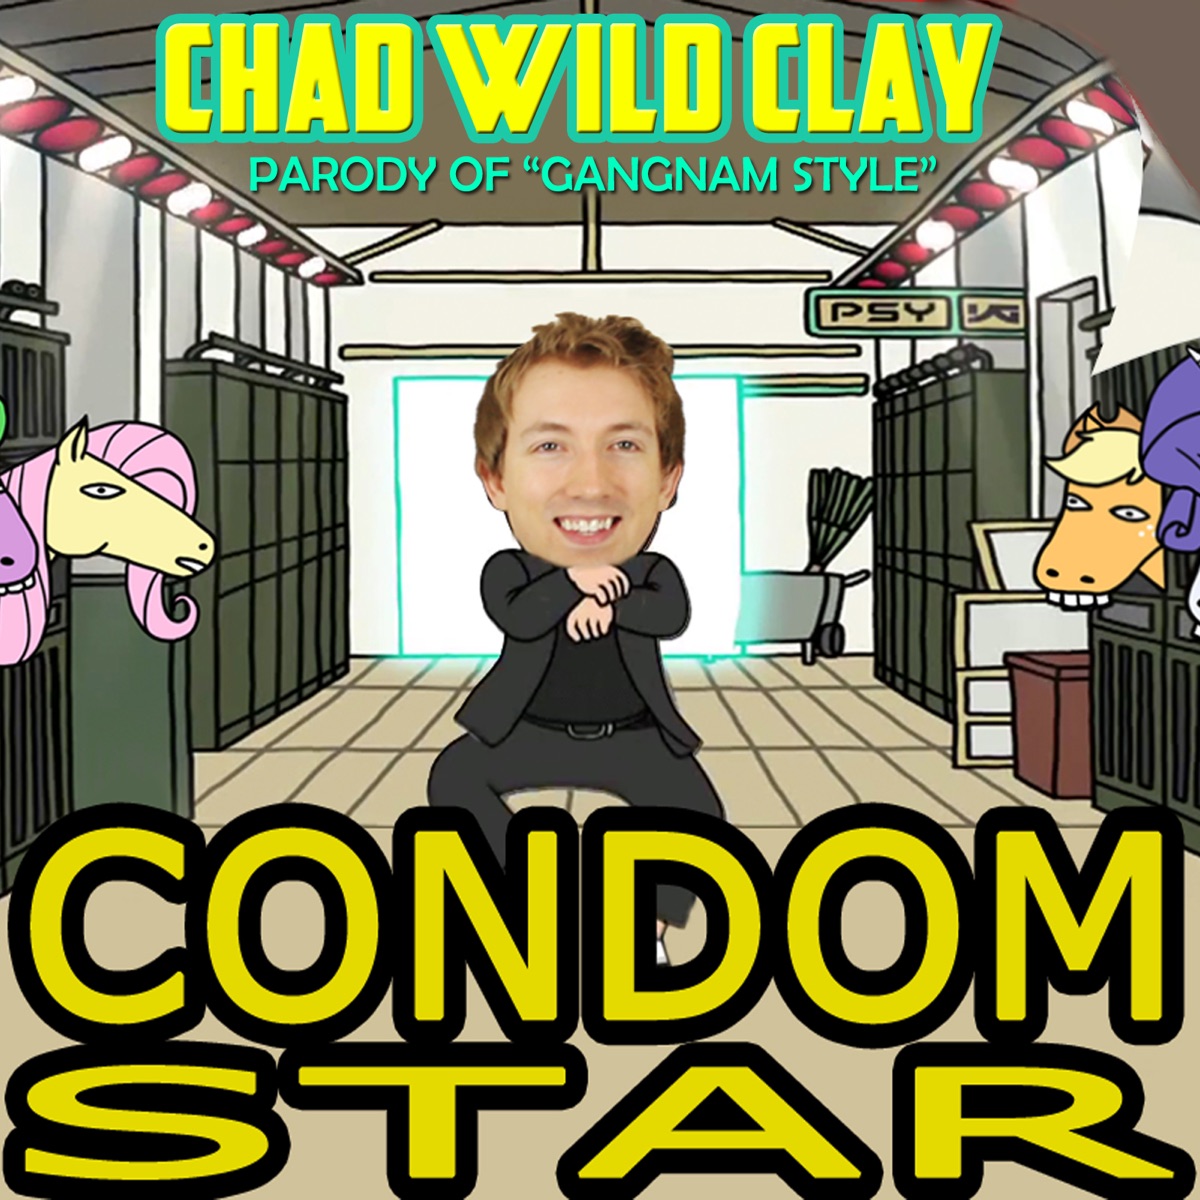 Open Condom Star (Parody of "Gangnam Style") - Single - Album by Chad Wild  Clay - Apple Music